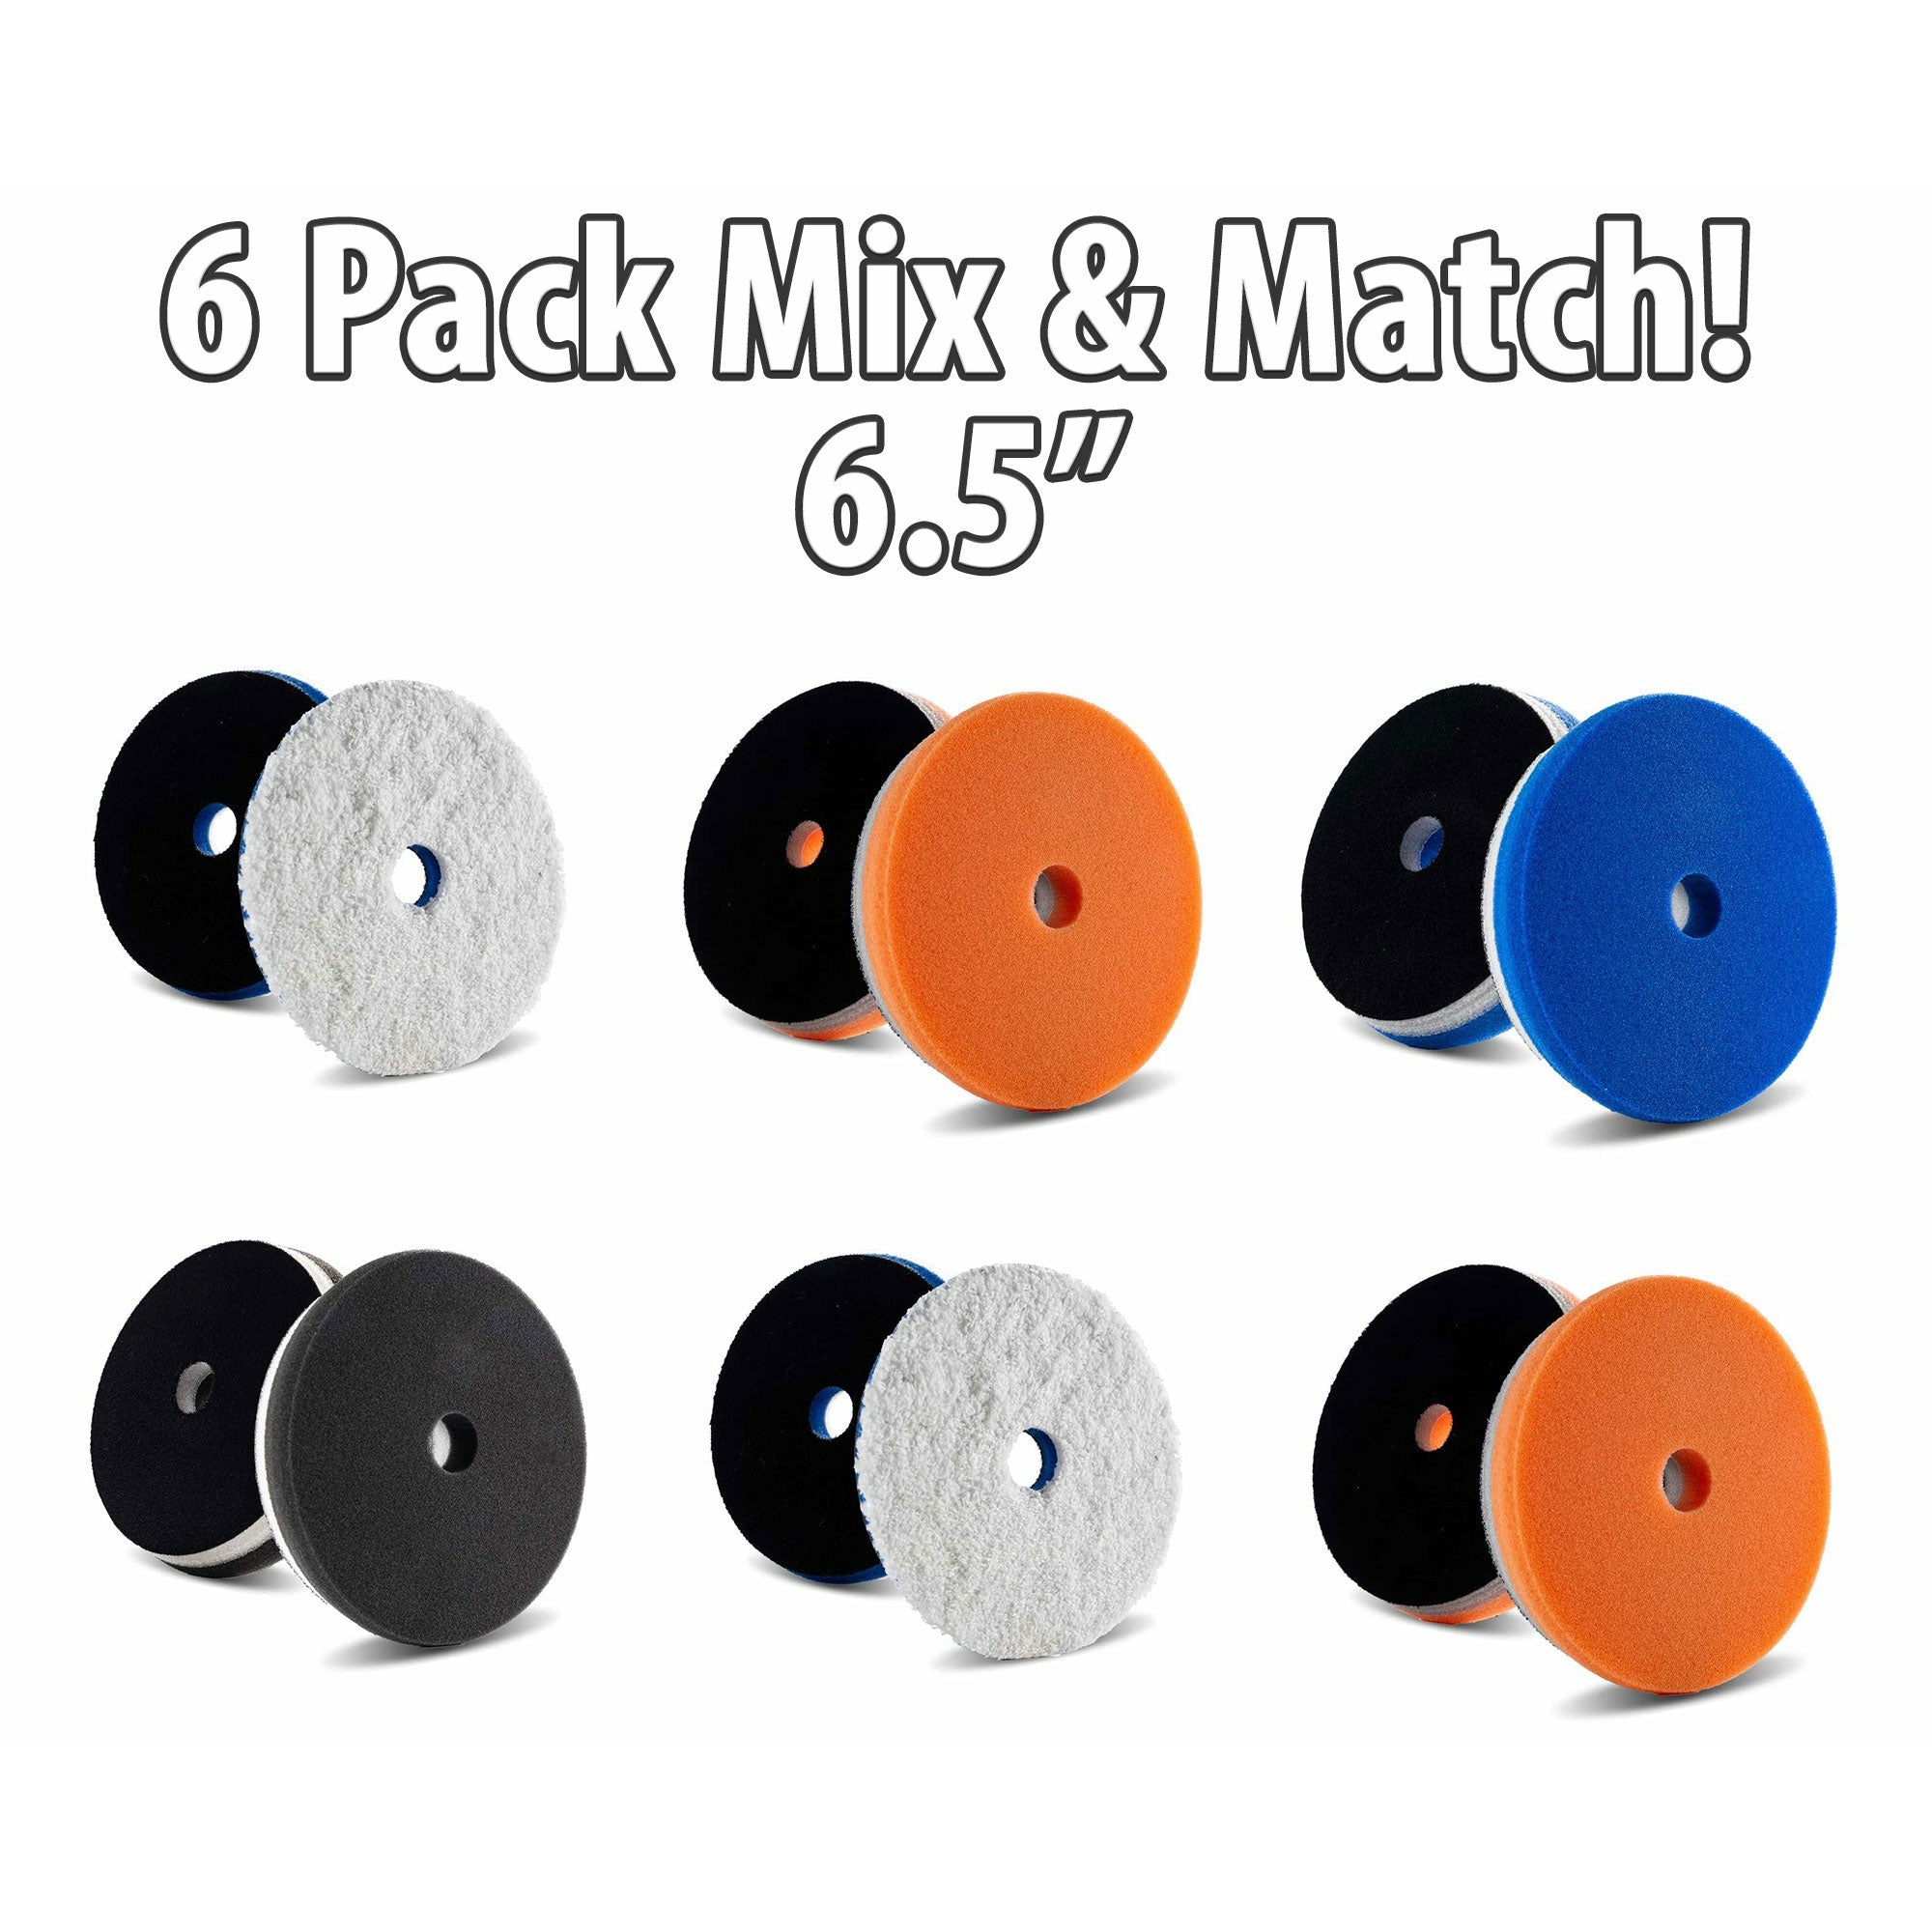 6 Pack 6.5 Inch Lake Country HDO Foam Pad - Your Choice - FREE BONUS!